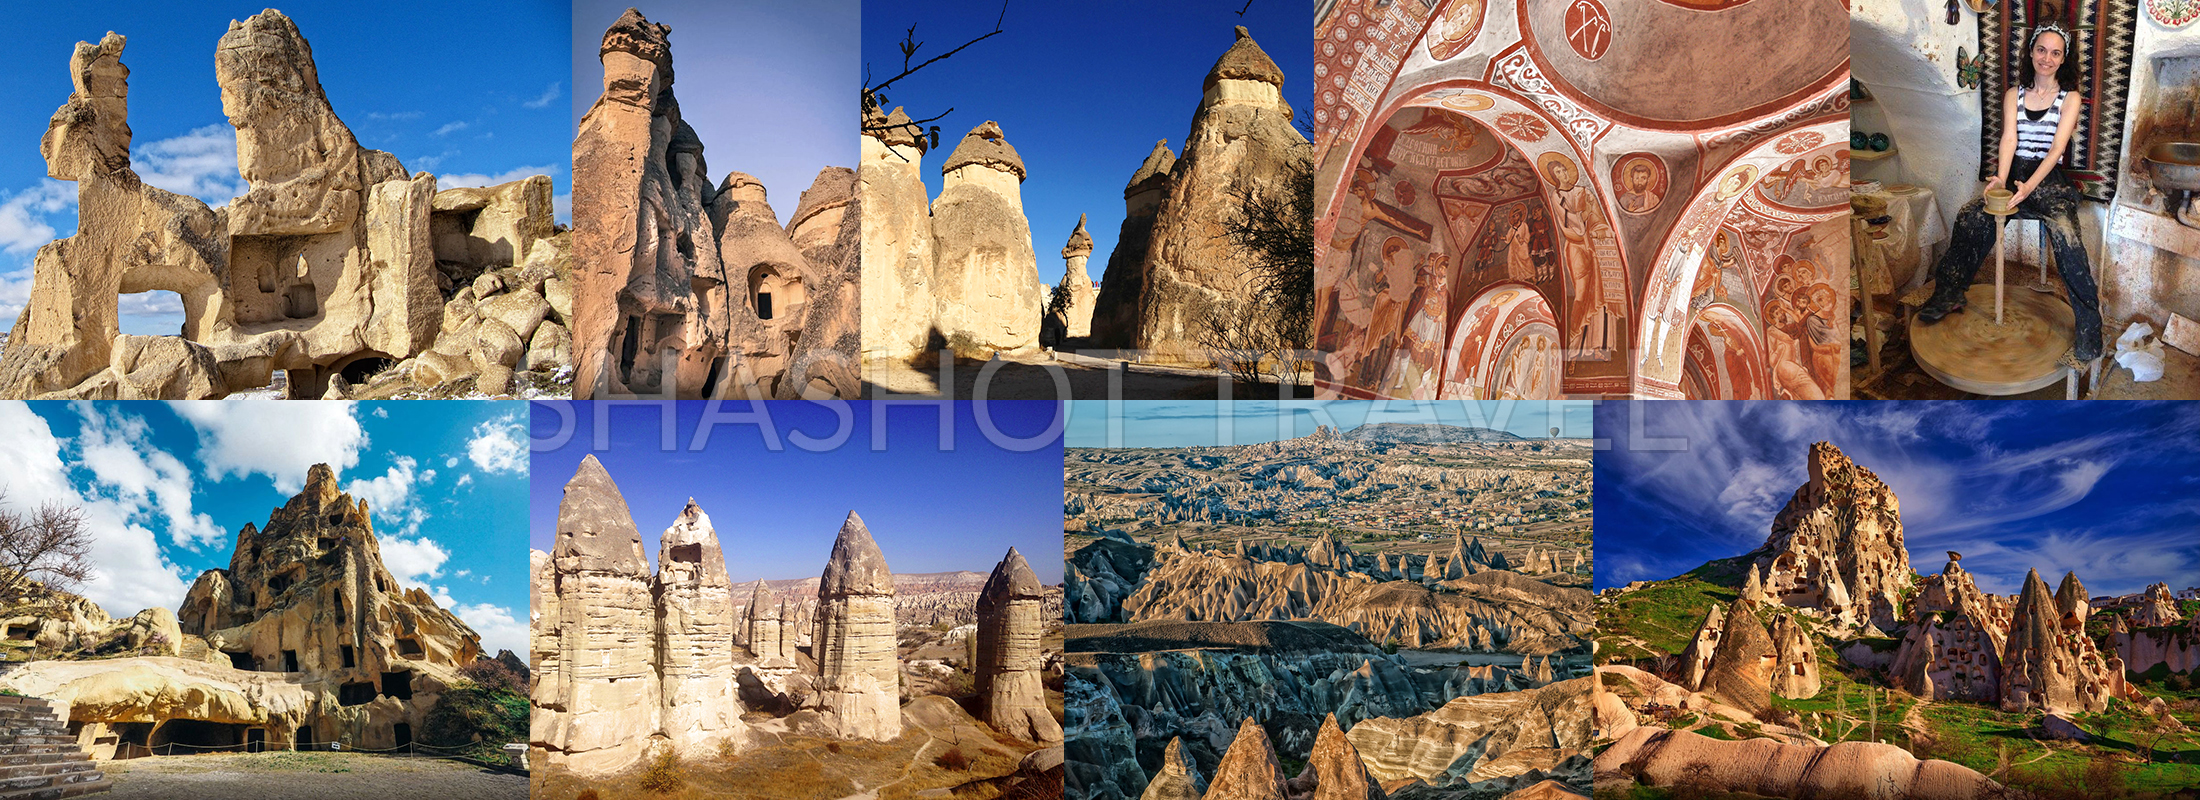 cappadocia-turkey-shashot-travel-red-tour